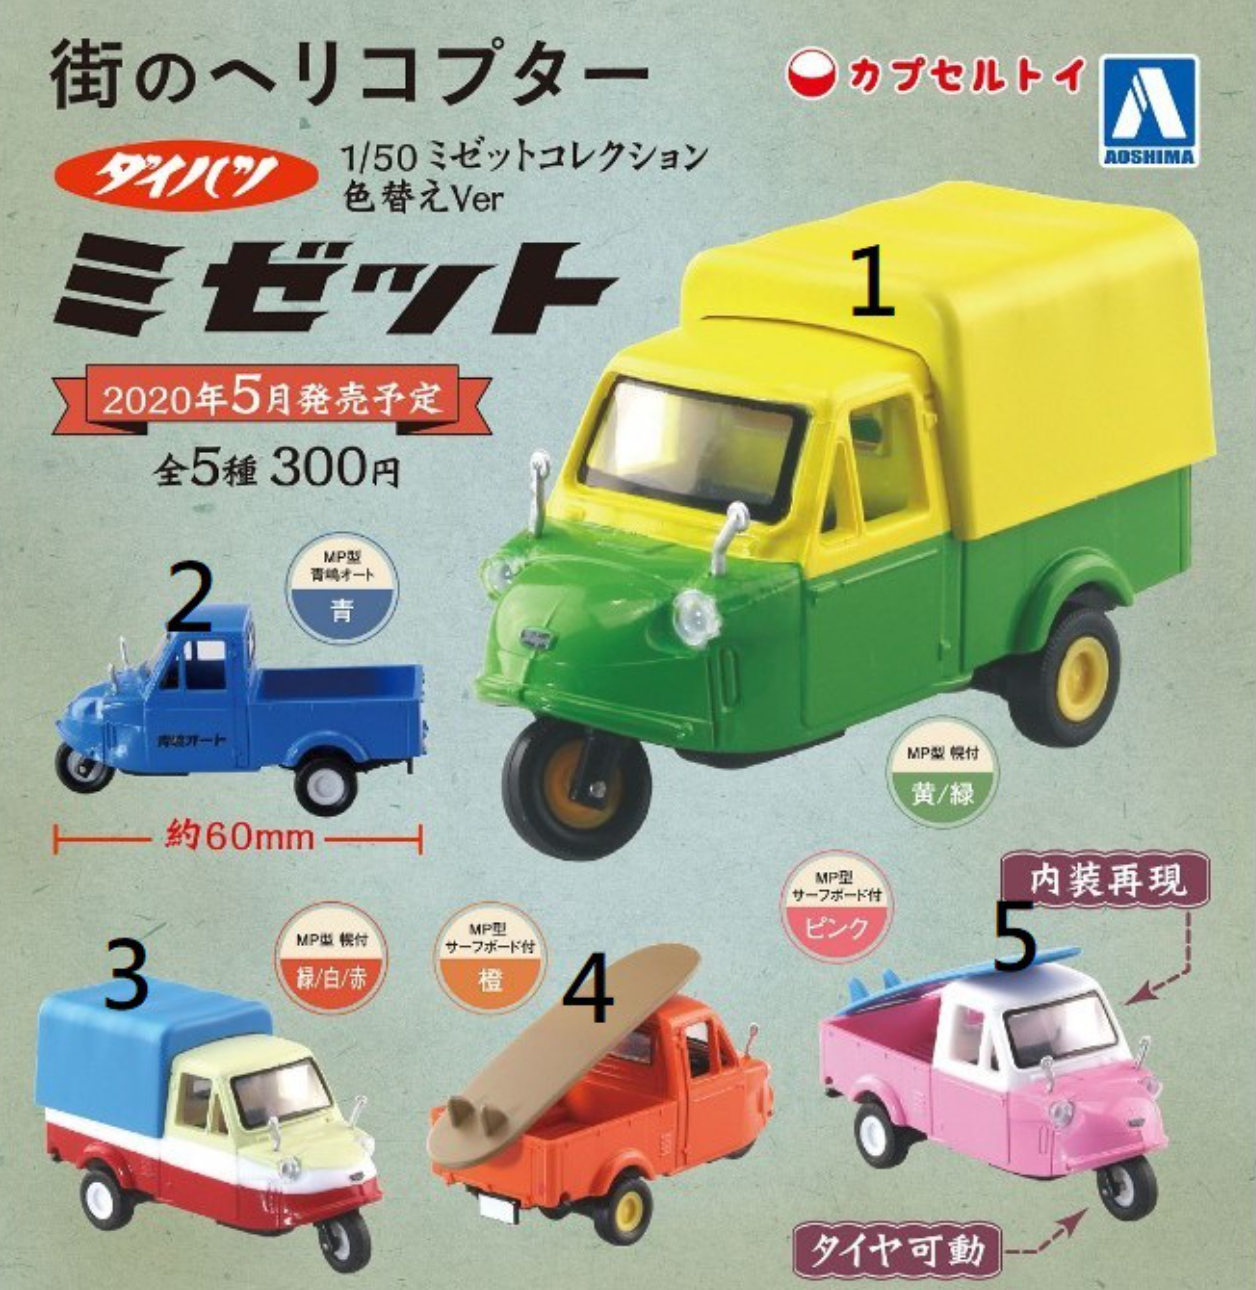 Aoshima Gashapon 1/50 Daihatsu Speical Color ver 5 Collection Figure Set